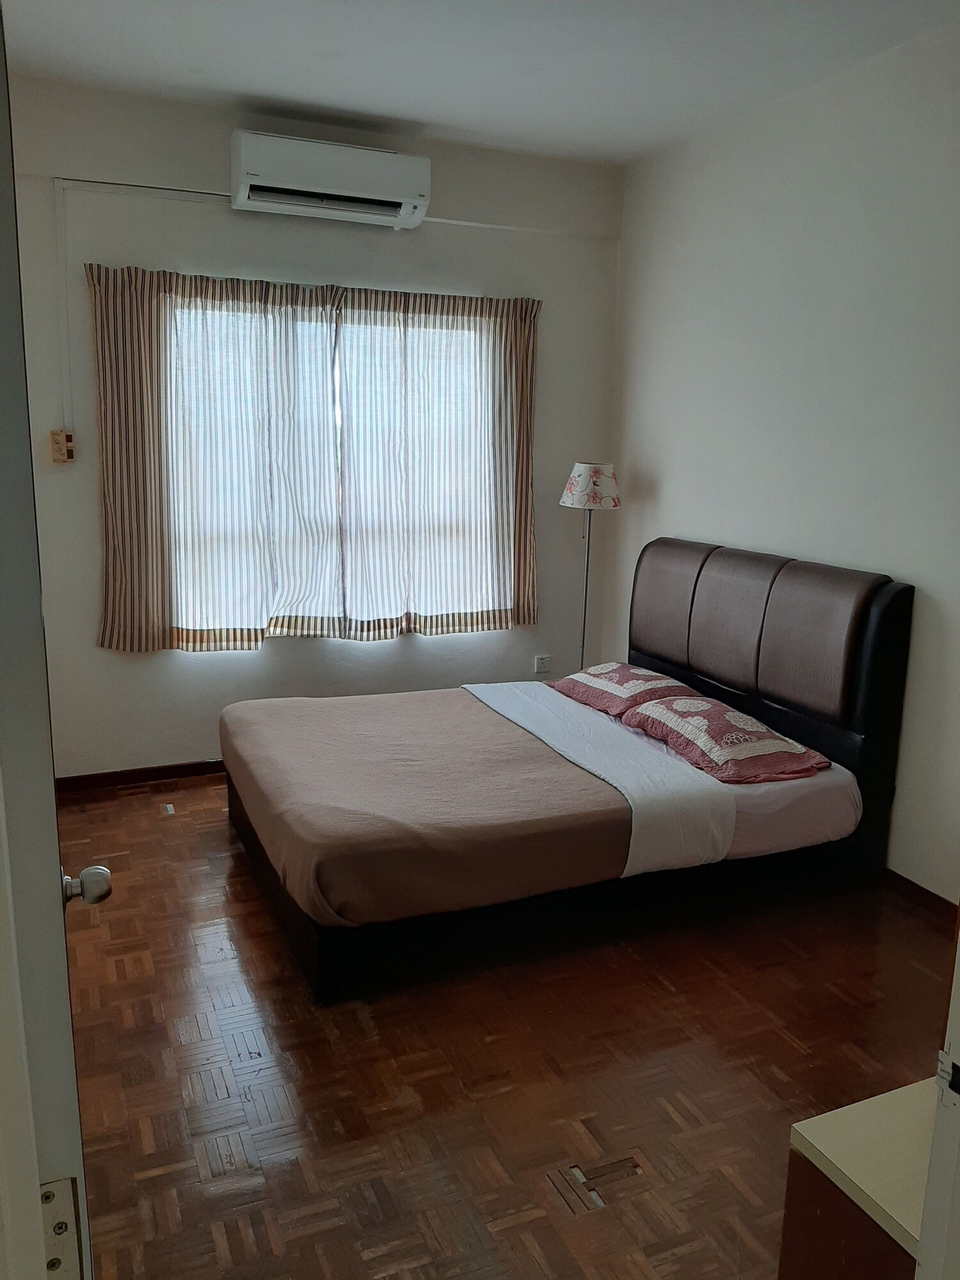 Bedroom, Straits View Villas Private Apartment at Port Dickson, Port Dickson